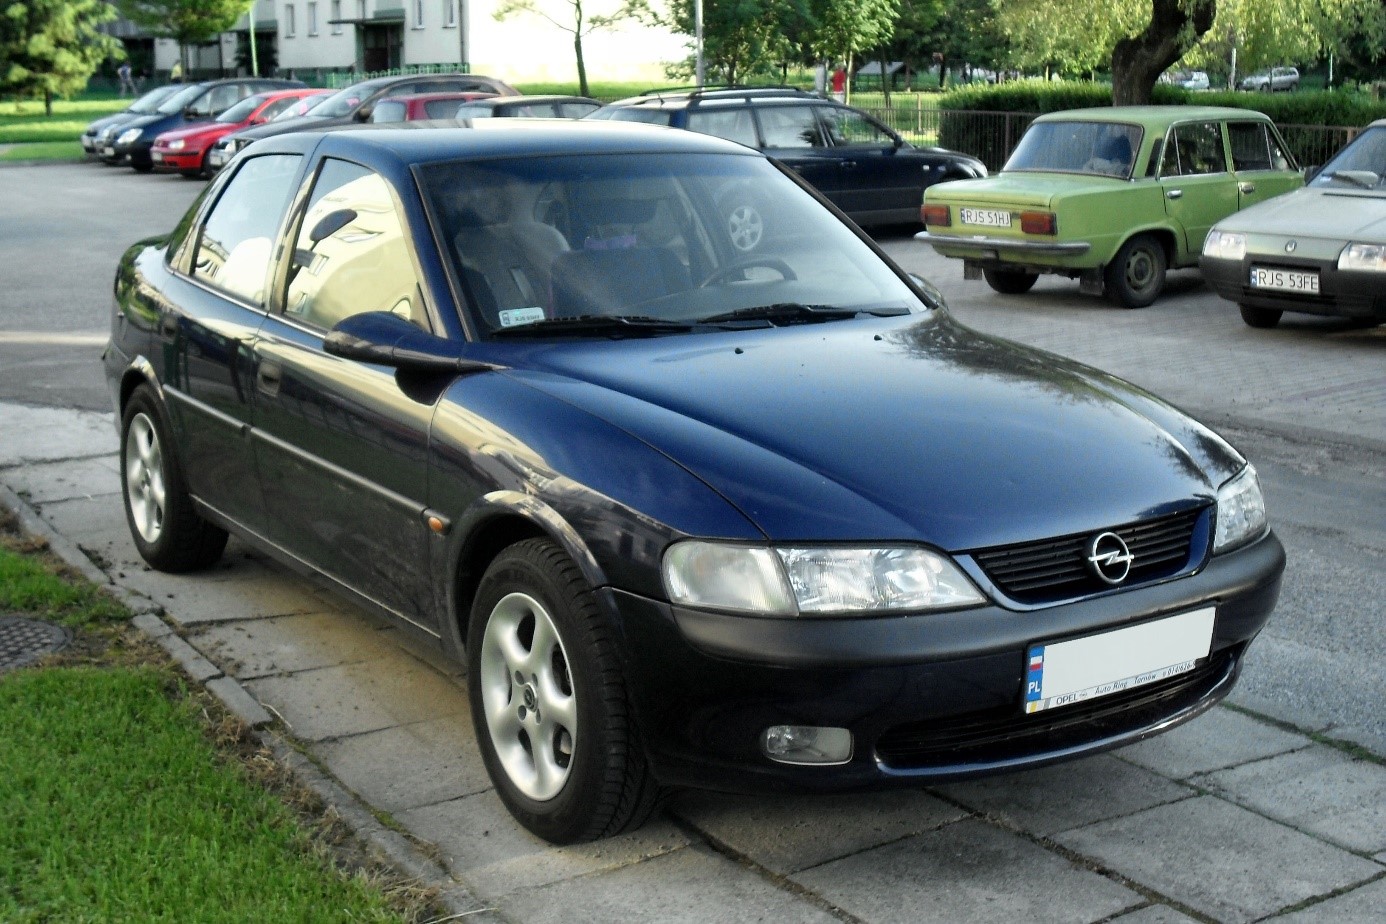 Opel Vectra b